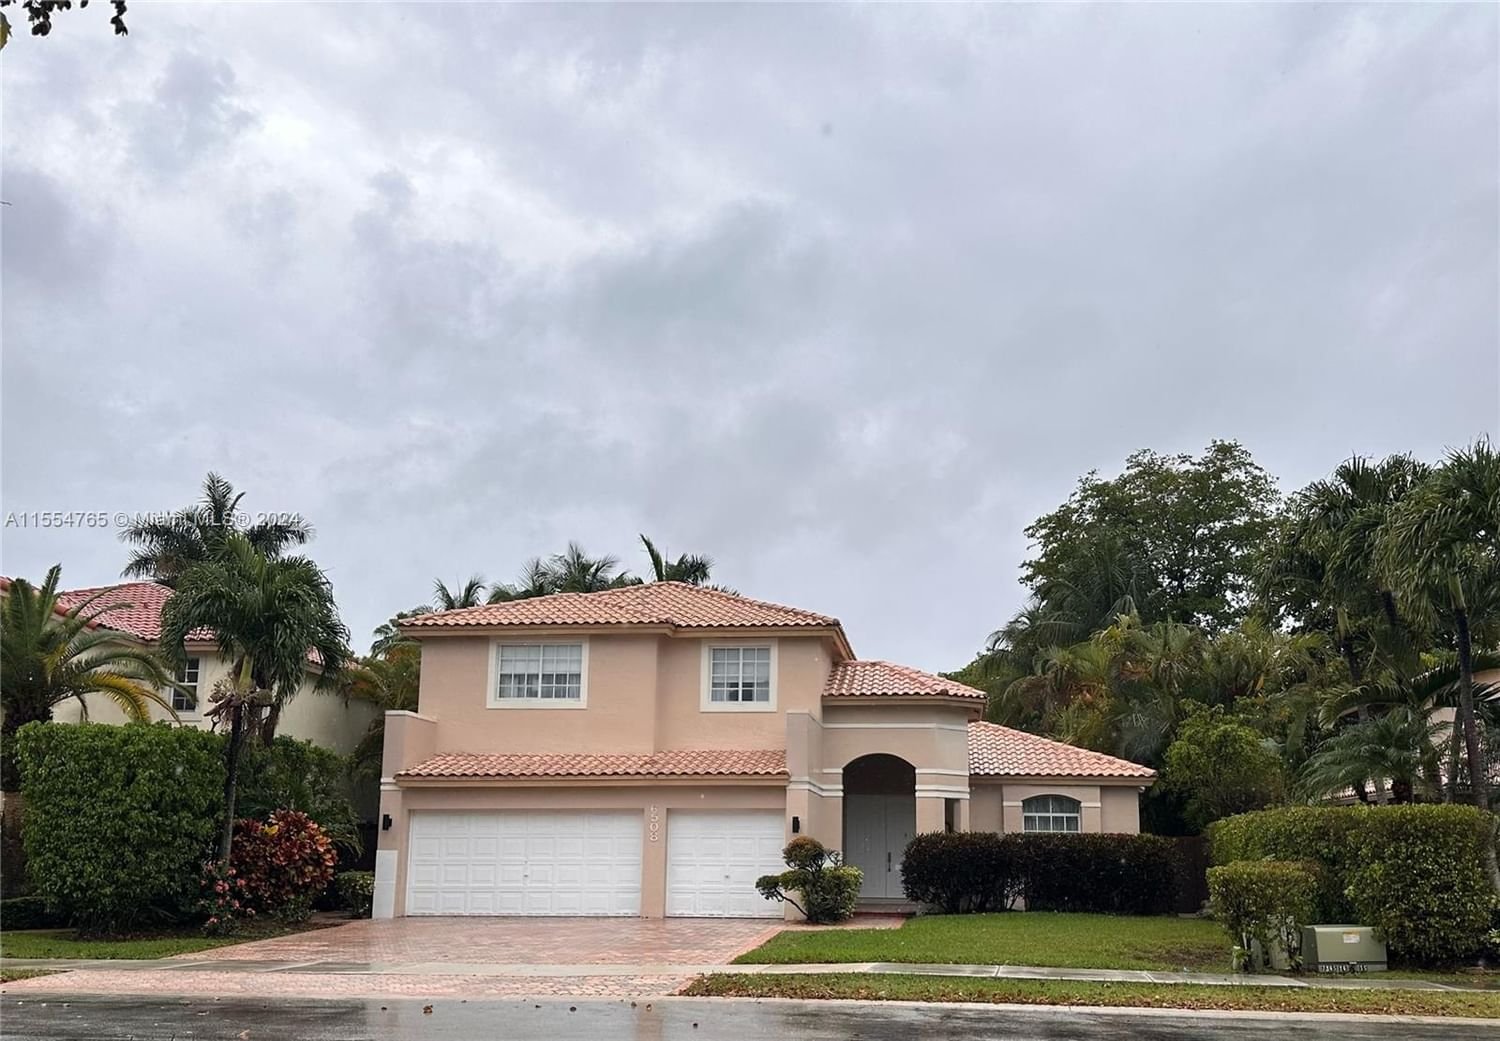 Real estate property located at 6508 113th Pl, Miami-Dade County, DORAL ISLES RIVIERA, Doral, FL